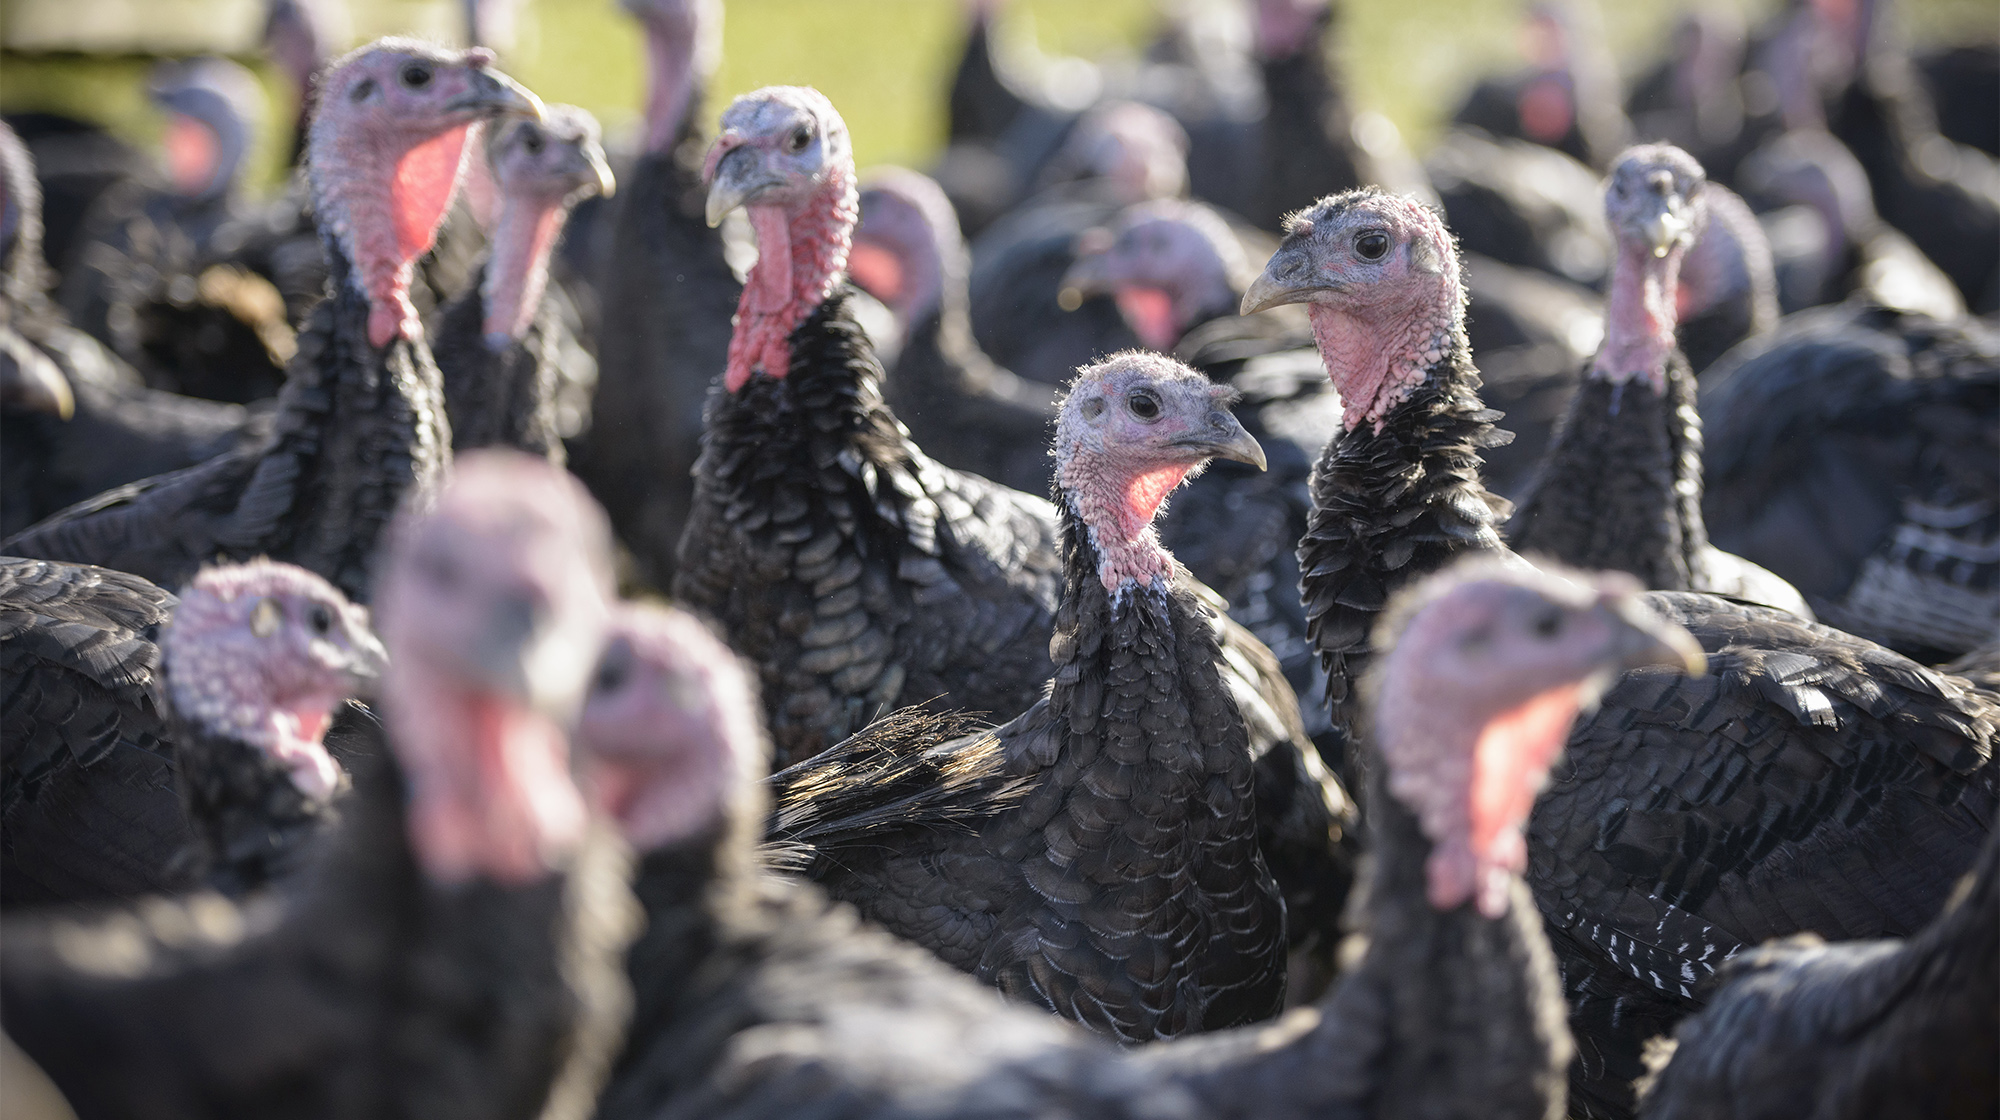 More Than 100,000 Turkeys Affected by US Bird Flu Outbreak